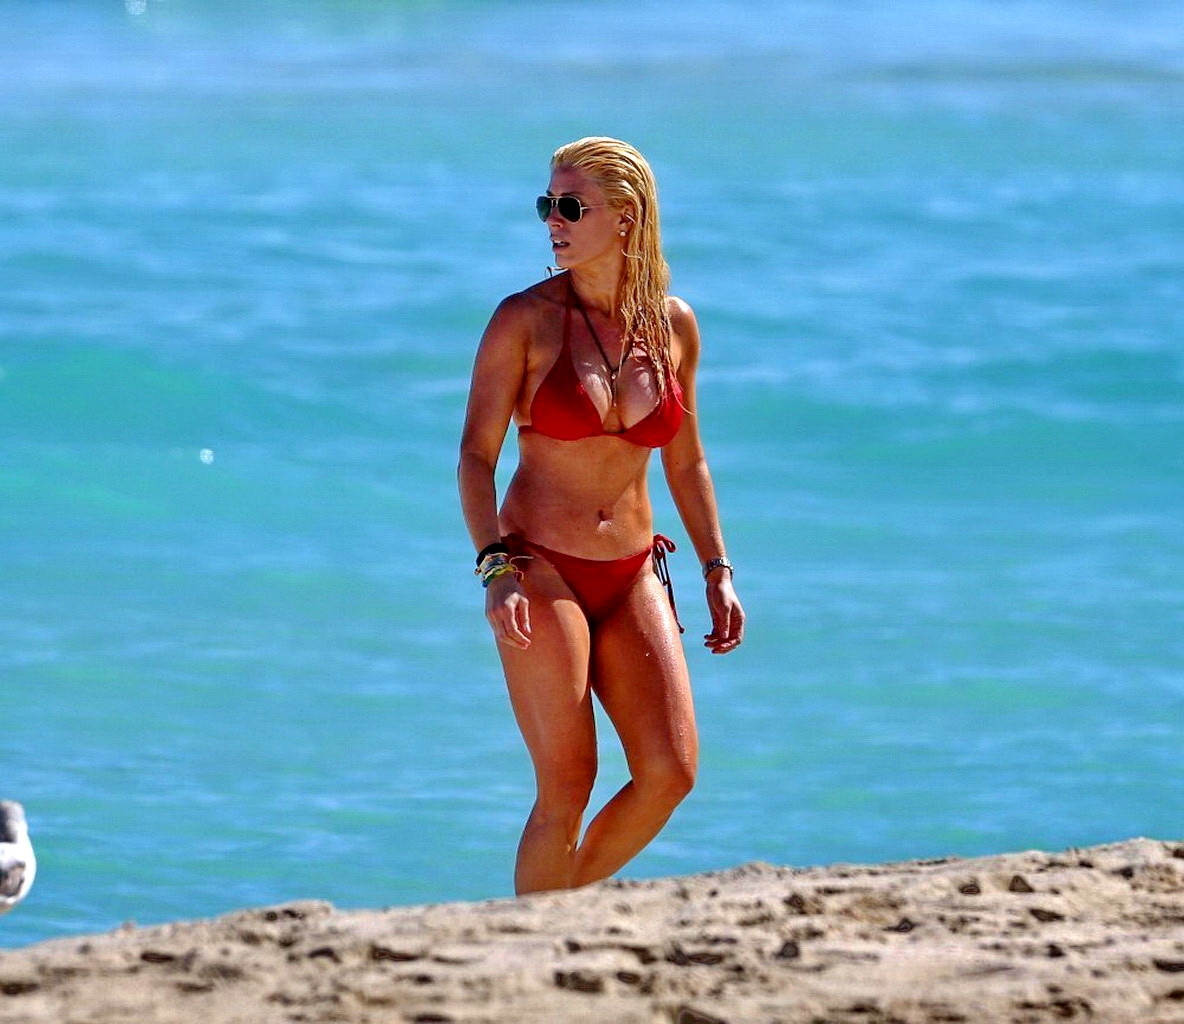 Jill Martin showing off her curvy bikini body on a beach in Miami #75204669